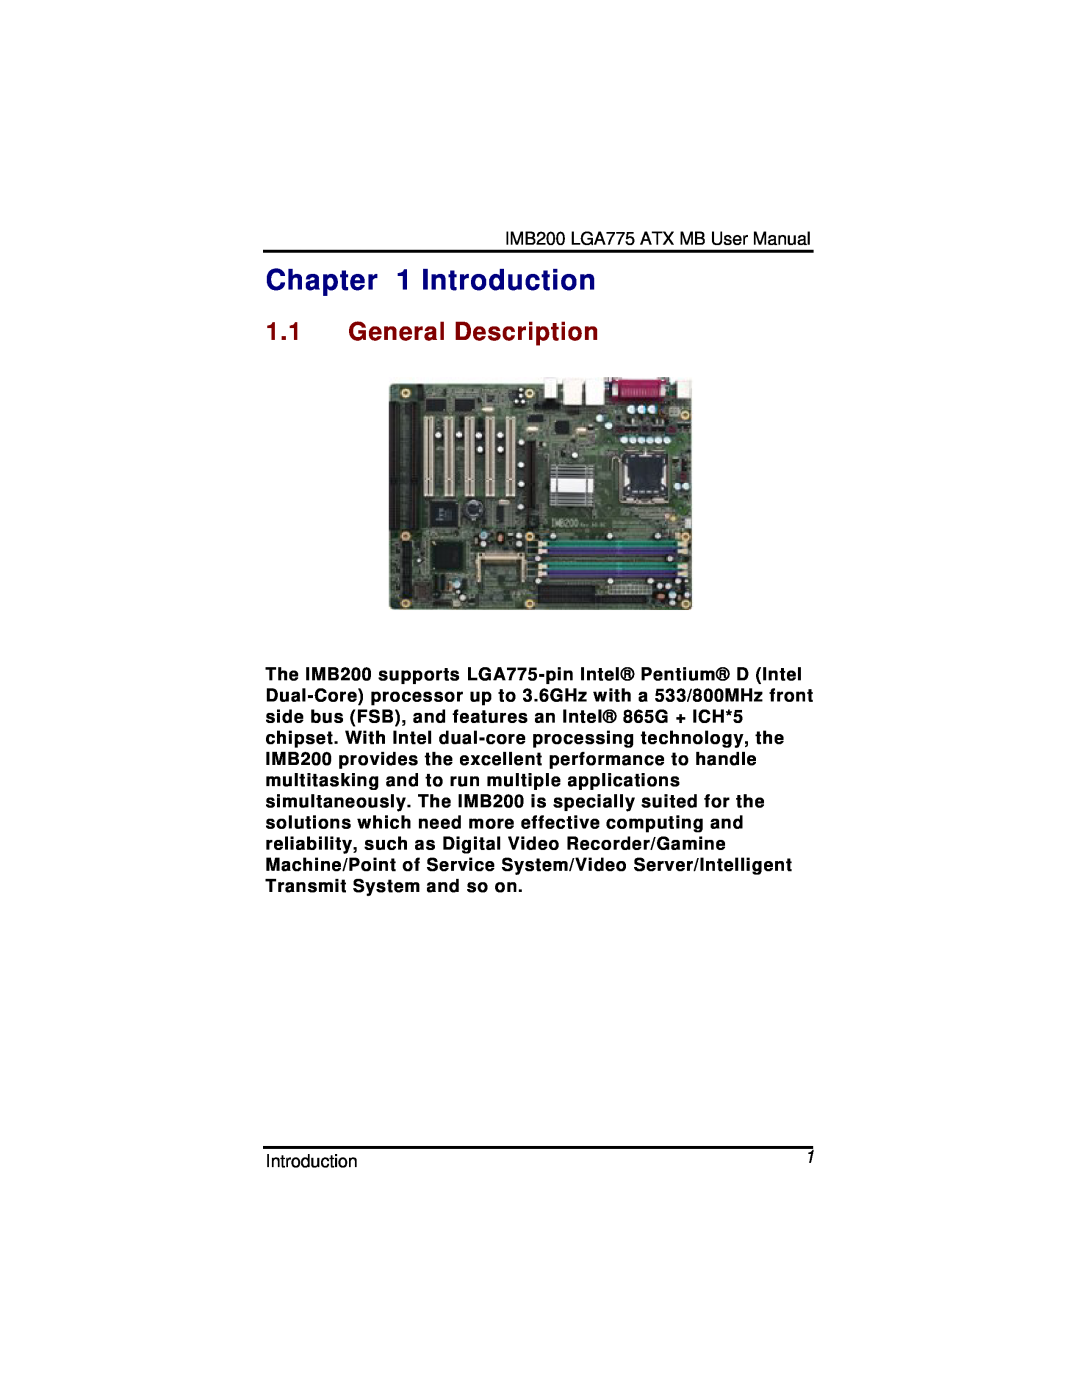 Intel IMB200VGE user manual Introduction, General Description 